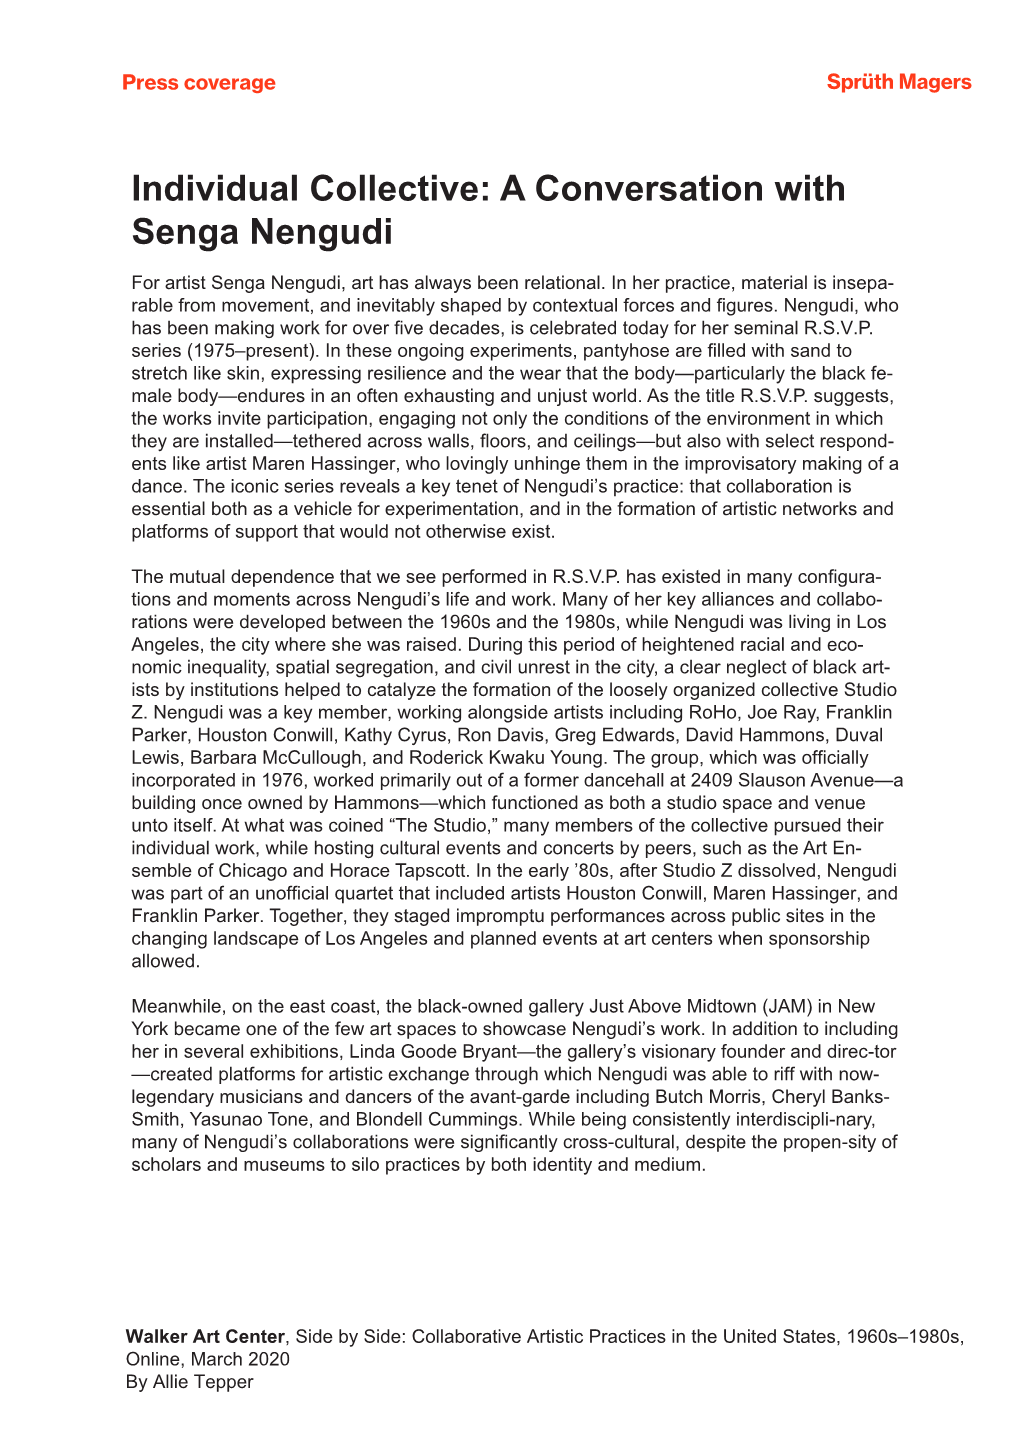 Individual Collective: a Conversation with Senga Nengudi